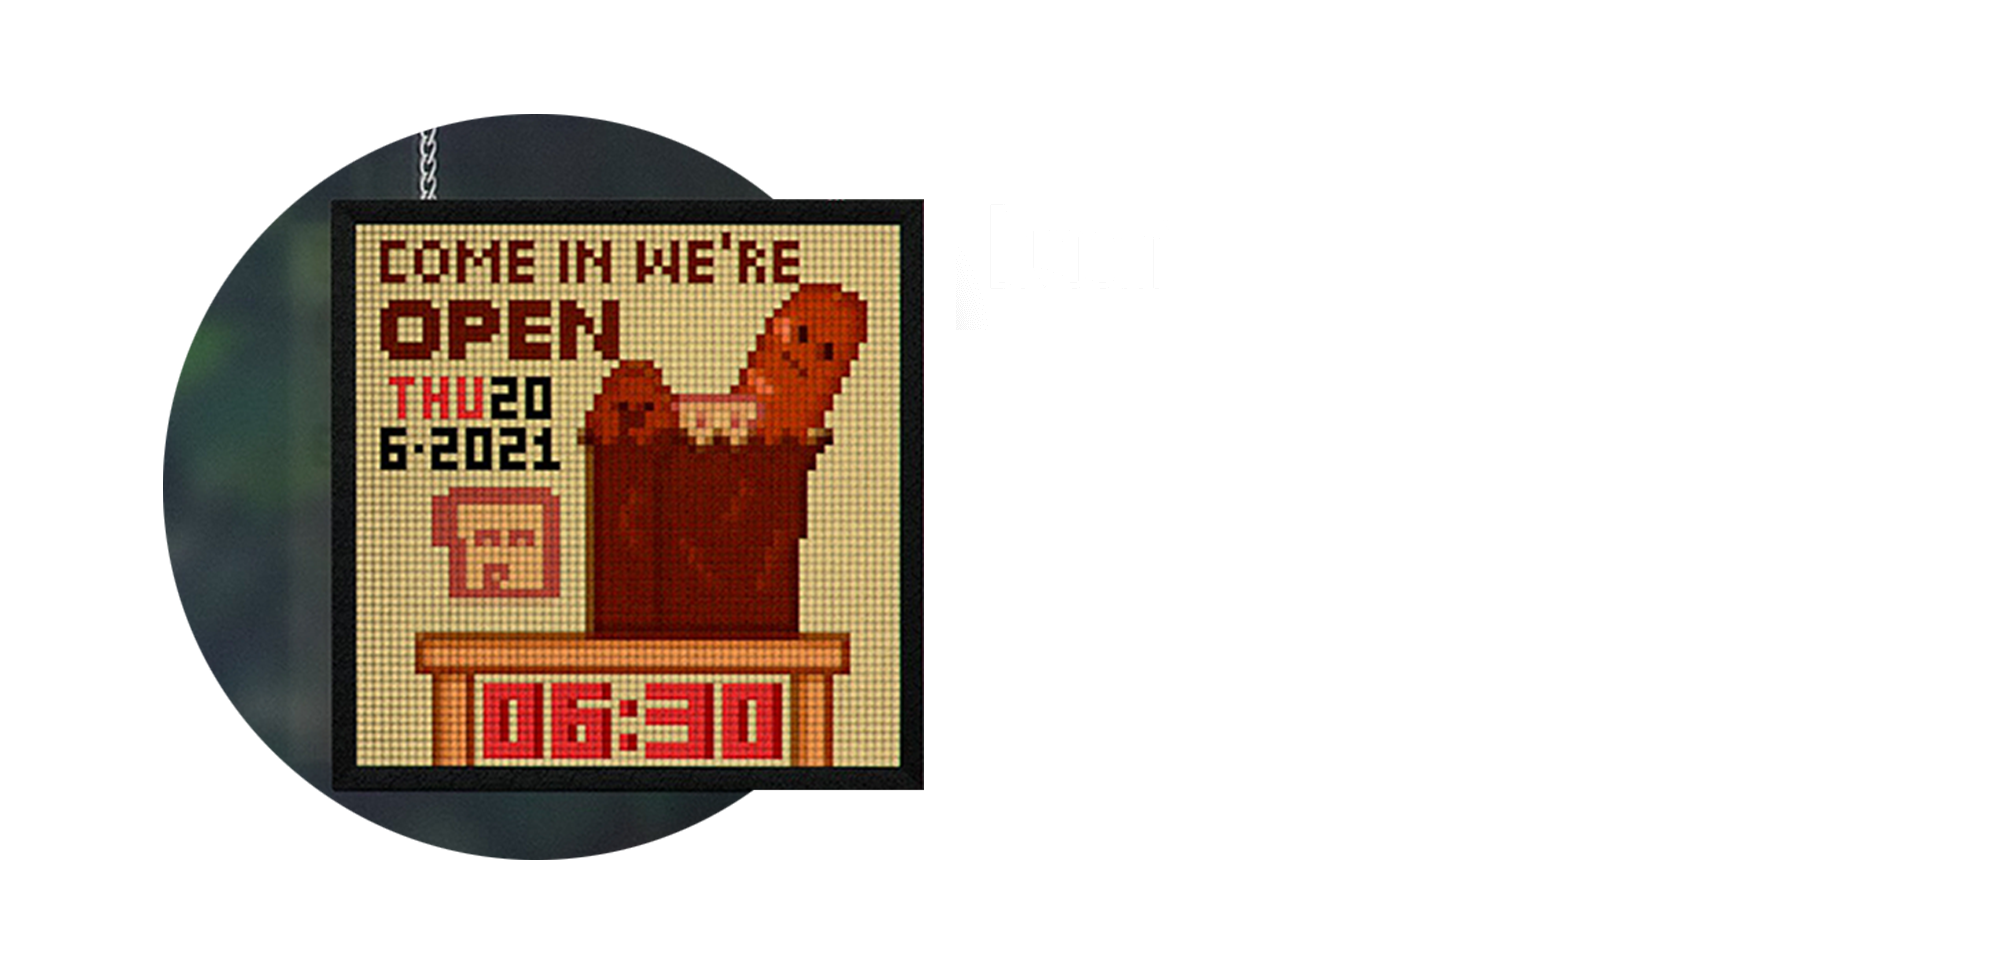 Pixoo64 Divoom ピクセルアートフレーム